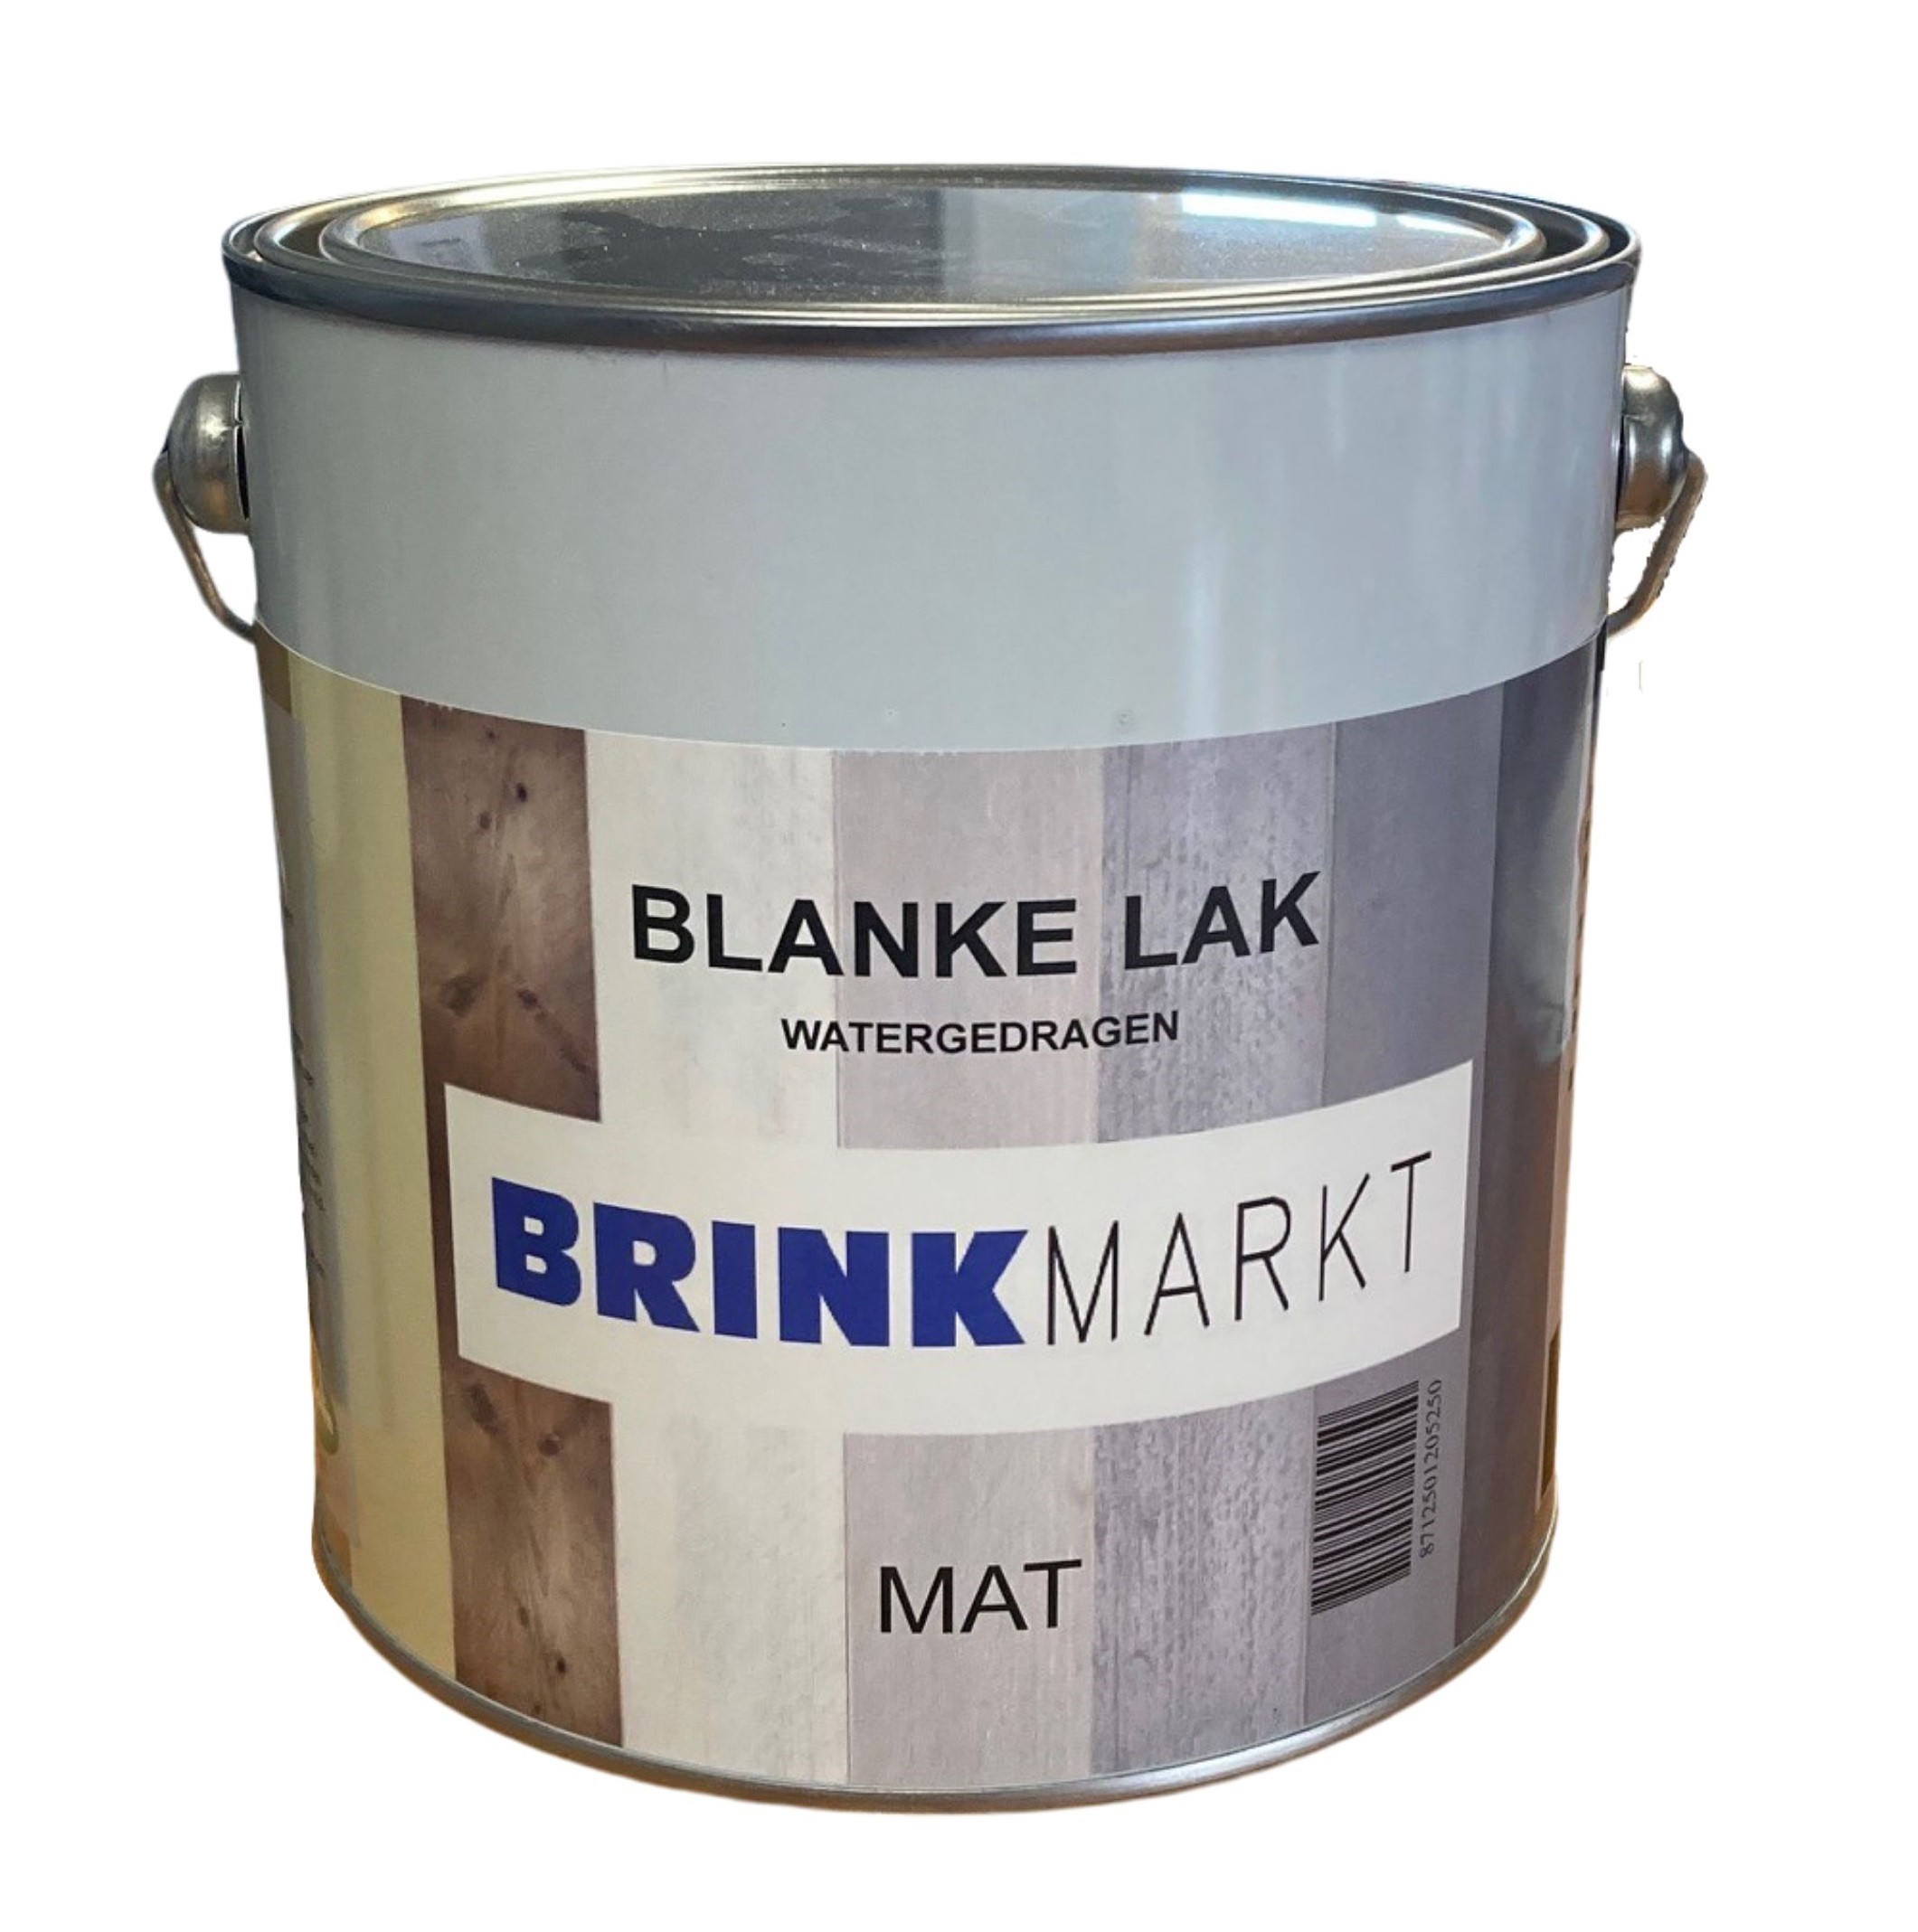 BM Blanke lak MAT 2,5 Ltr waterbasis (met gratis mixer vanaf 4 blikken)-8712501205250